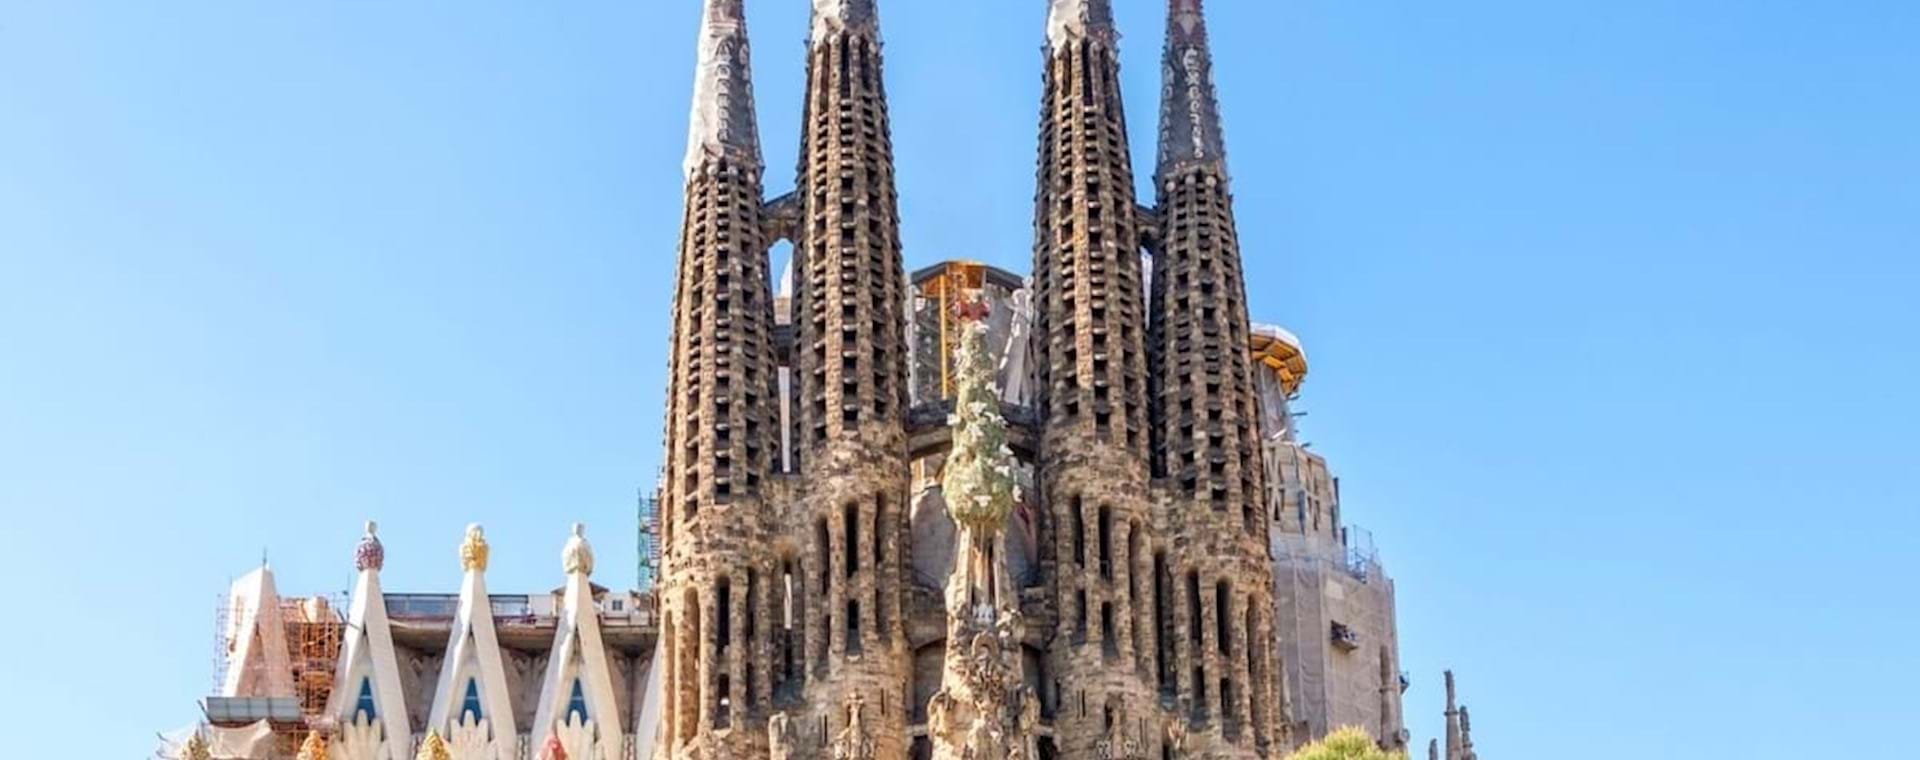 Sagrada Familia with optional Tower Tour Tickets - City Wonders